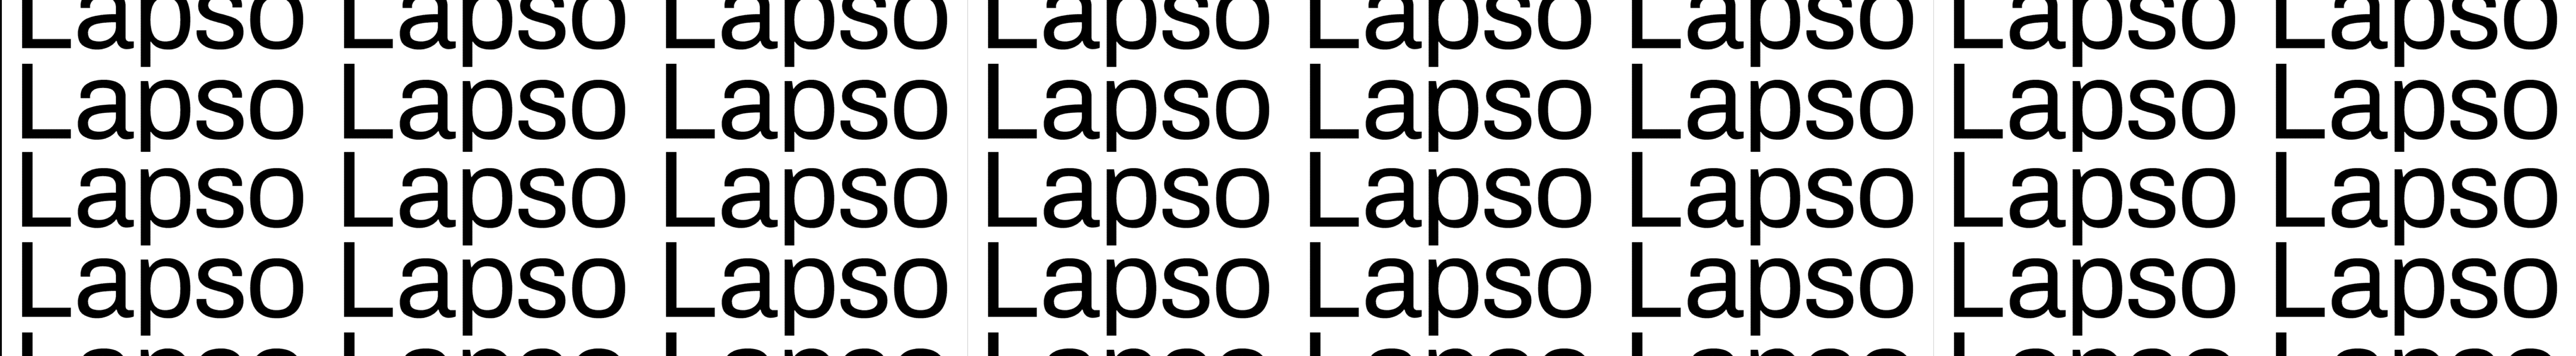 Lapso studio's profile banner